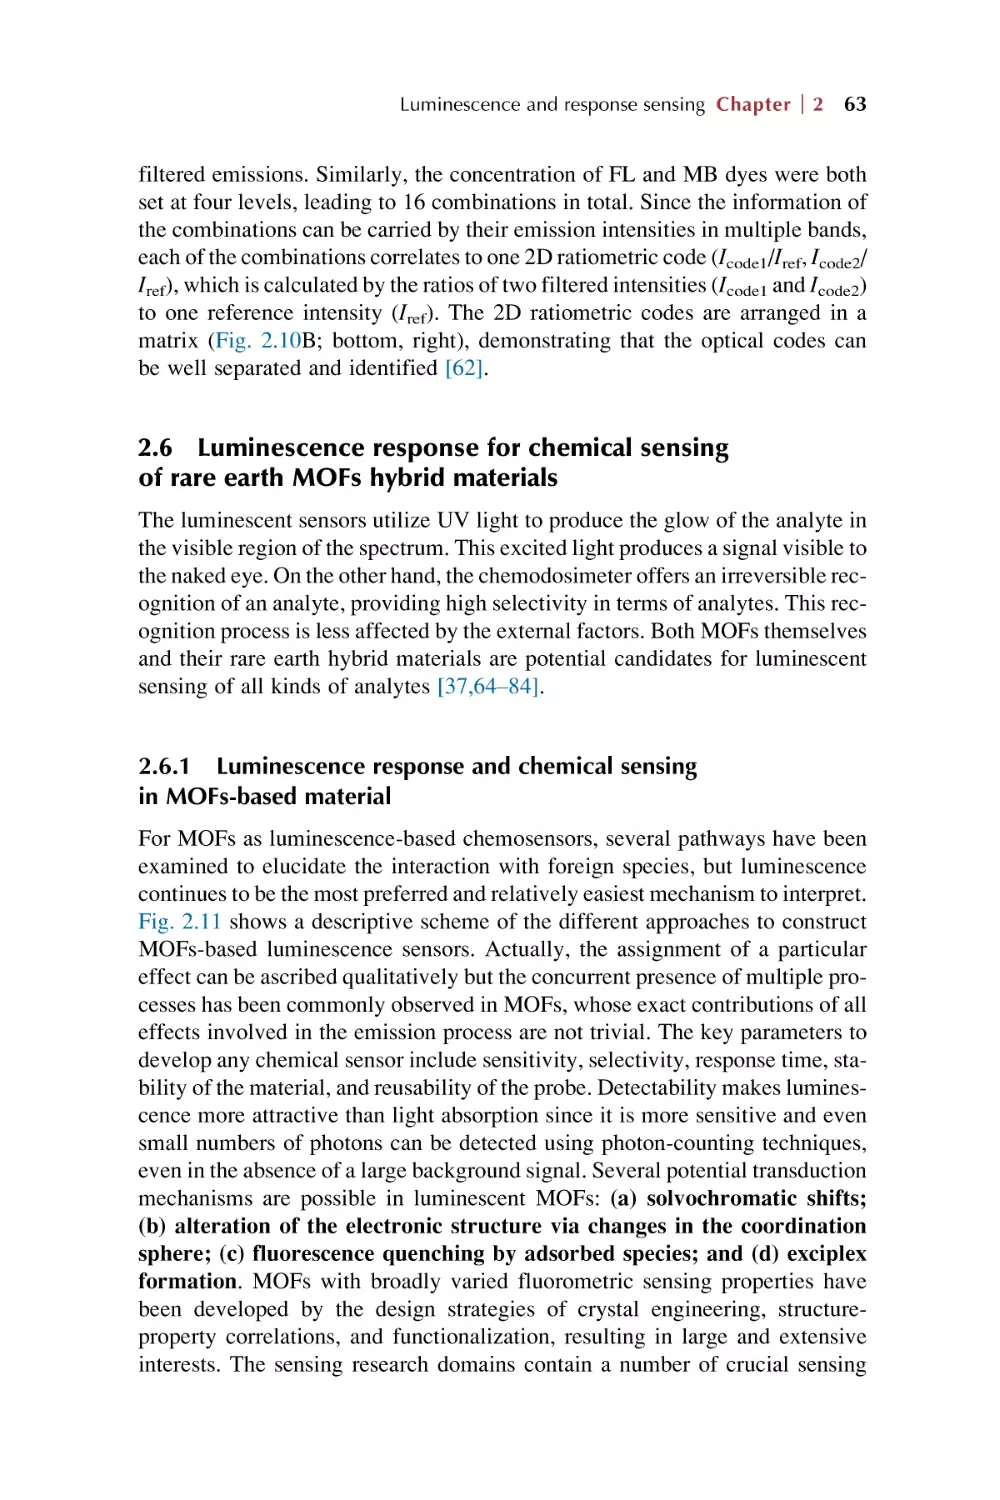 2.6. Luminescence response for chemical sensing of rare earth MOFs hybrid materials
2.6.1. Luminescence response and chemical sensing in MOFs-based material